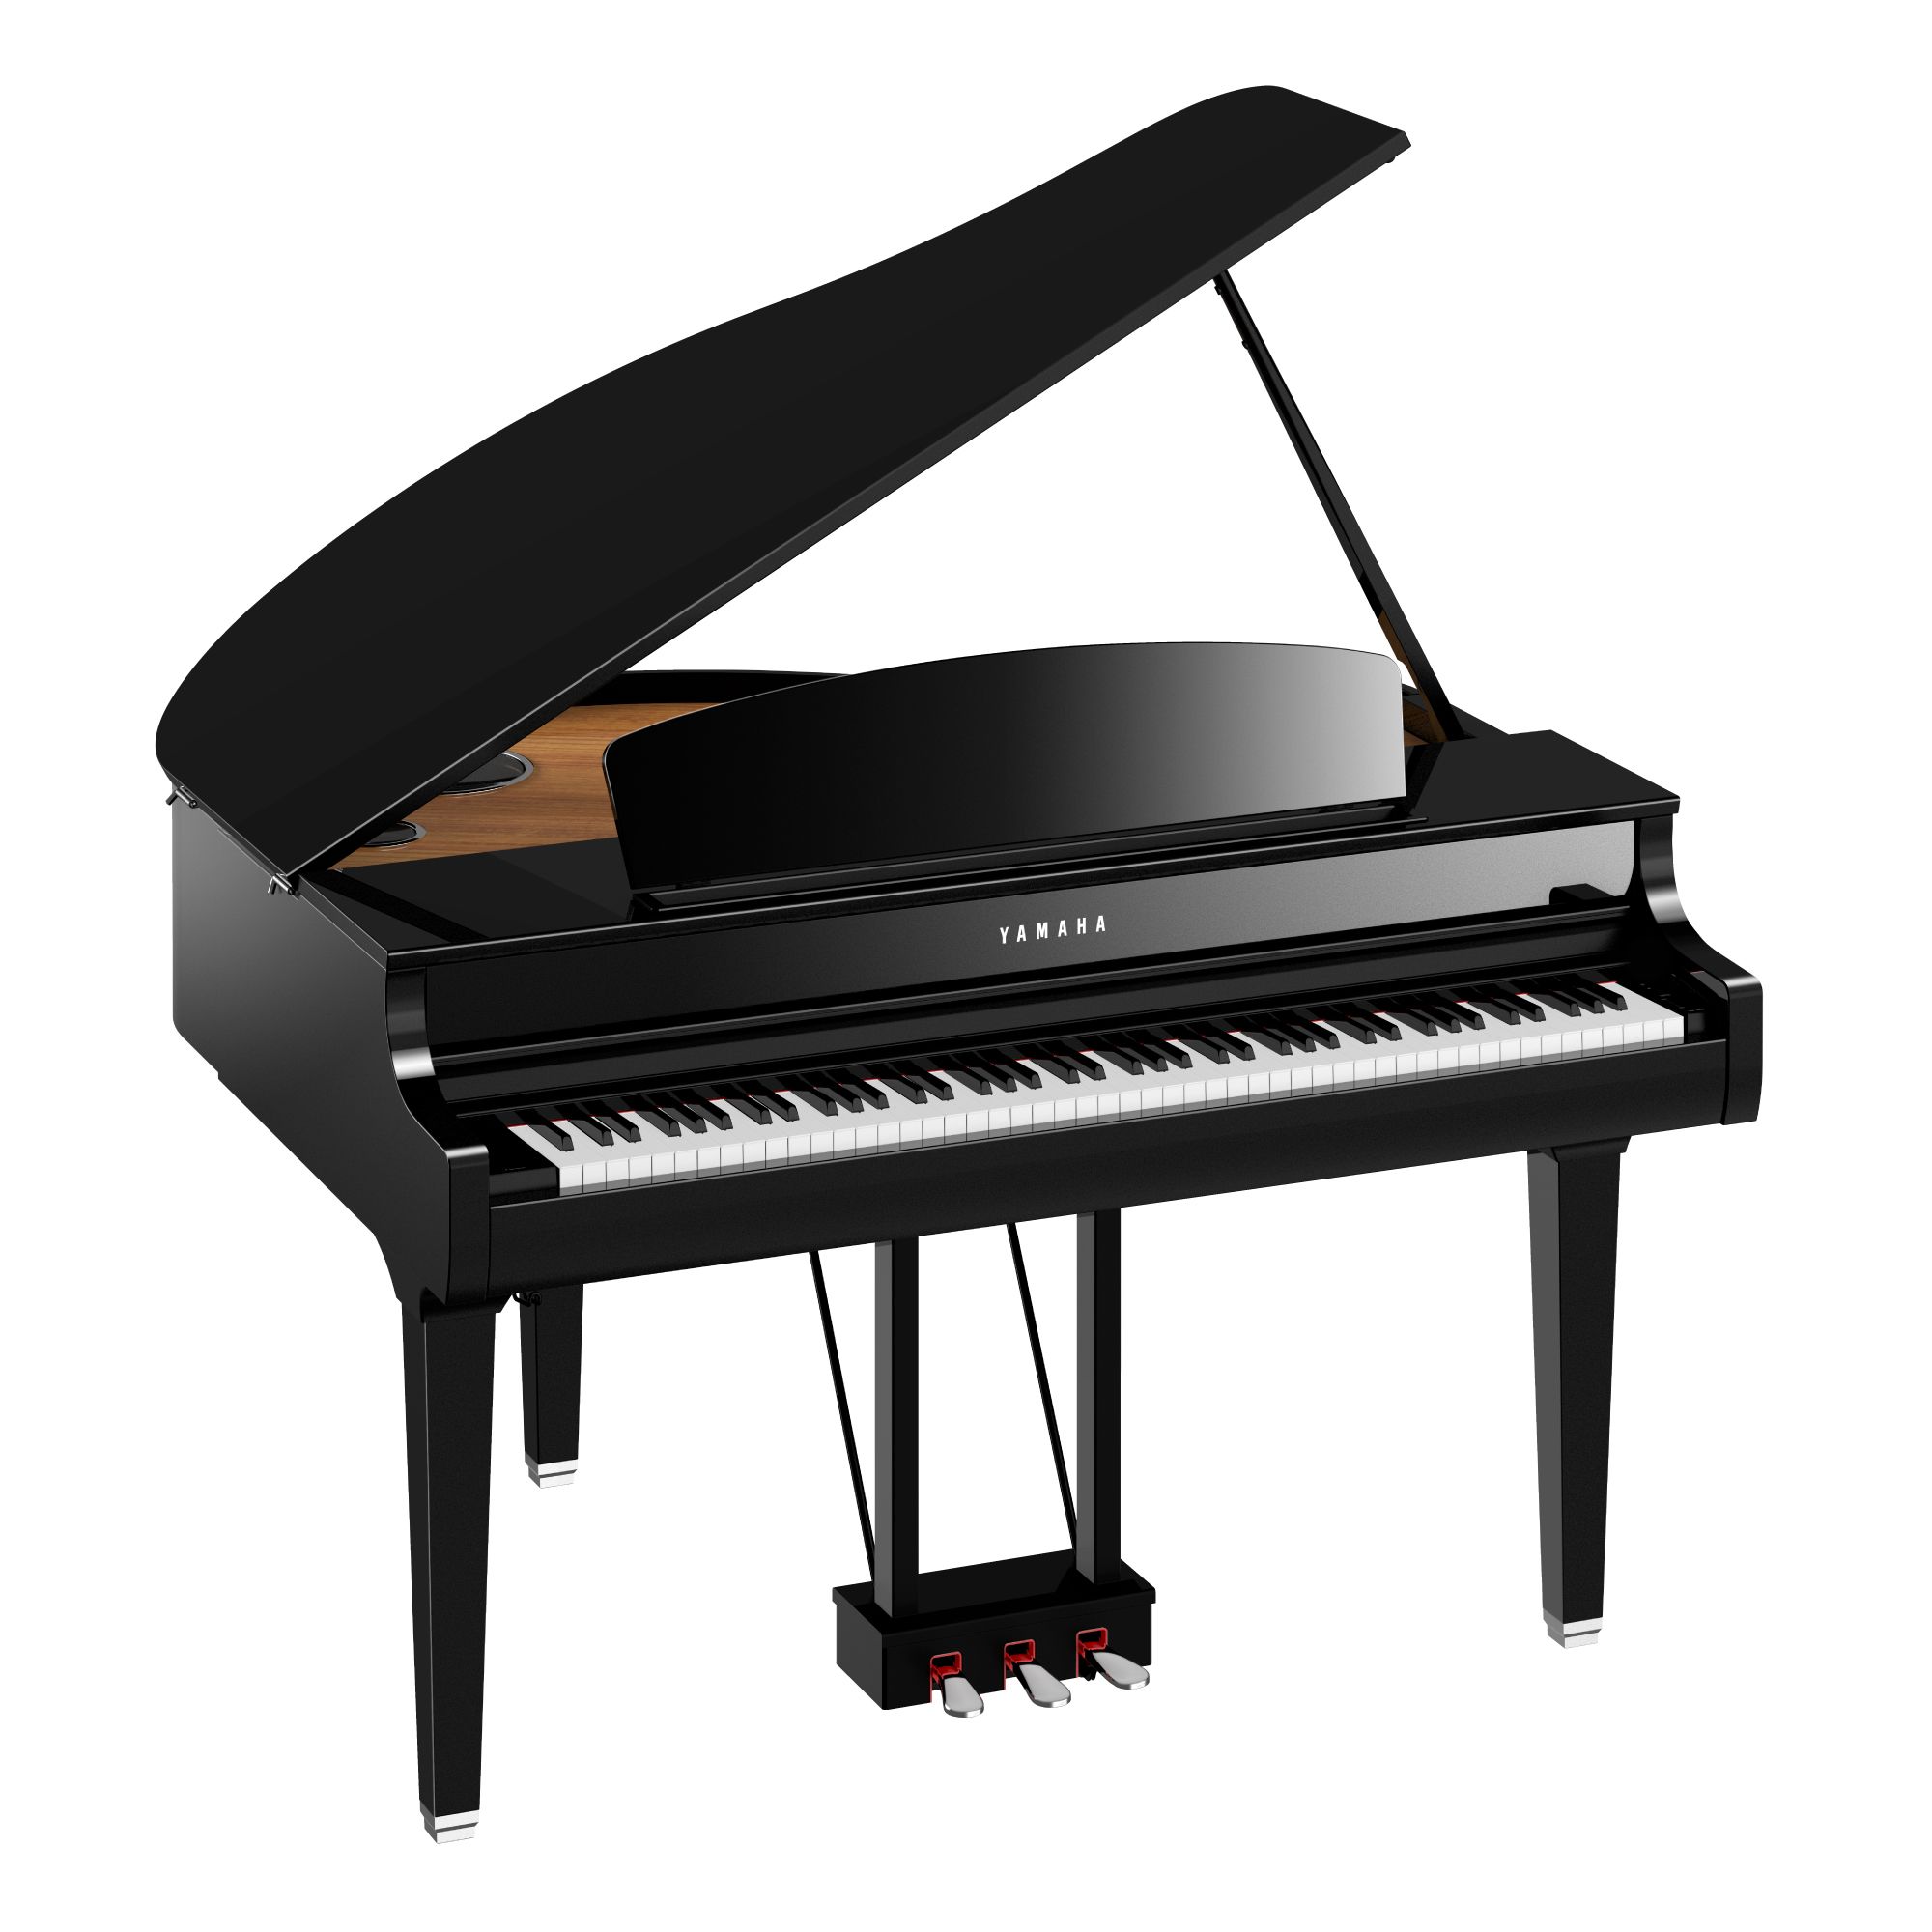 پیانو دیجیتال یاماها مدل CLP 795GP